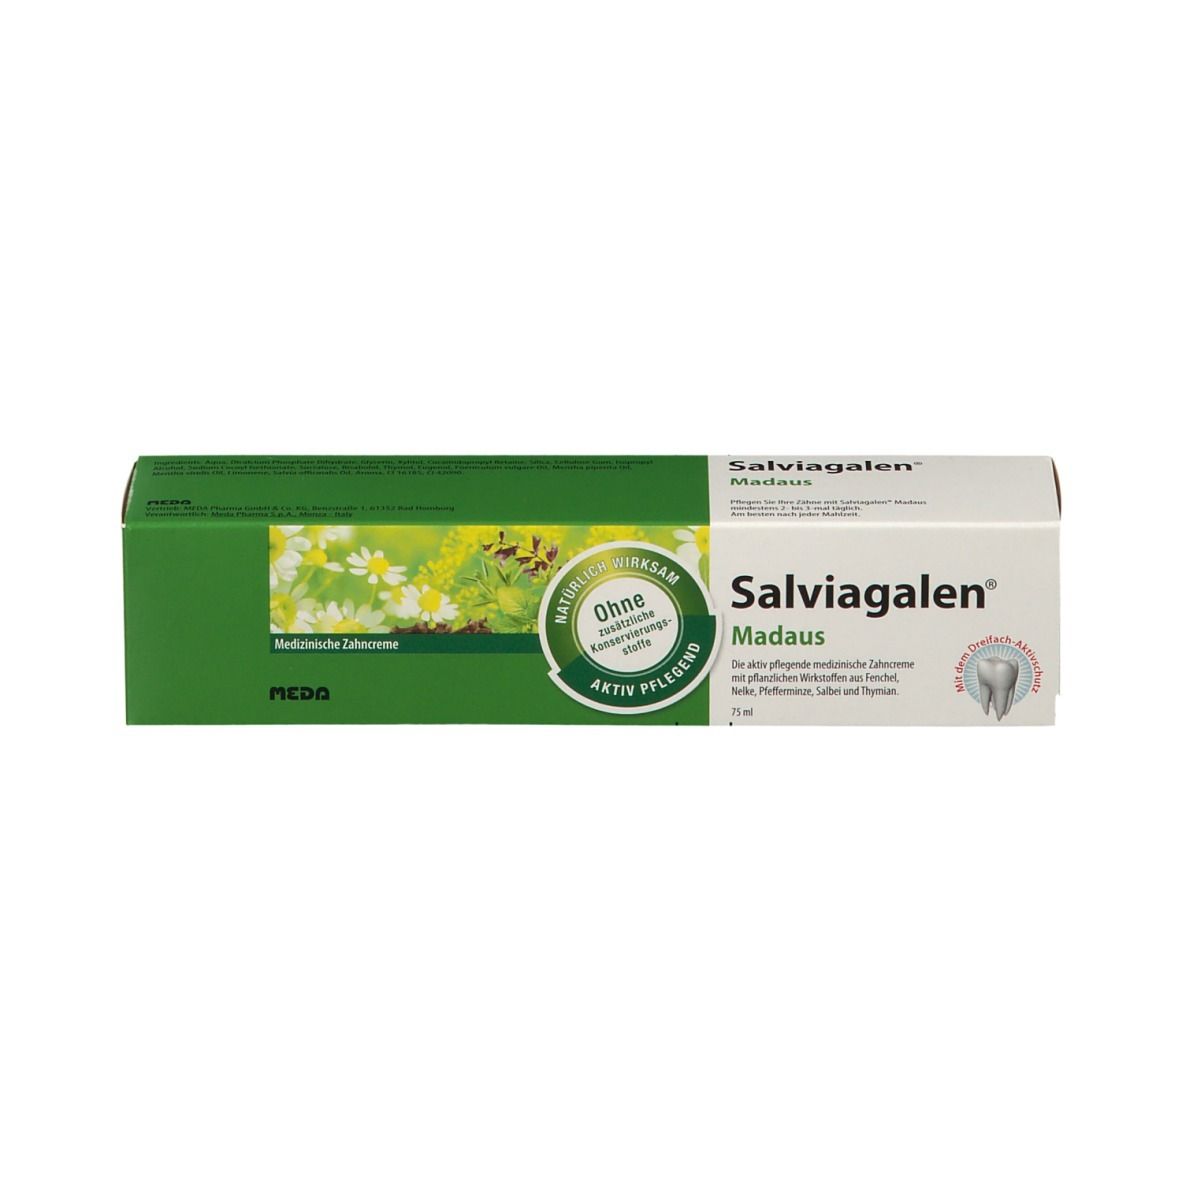 Salviagalen Madaus - Medizinische Zahnpasta ohne Fluorid